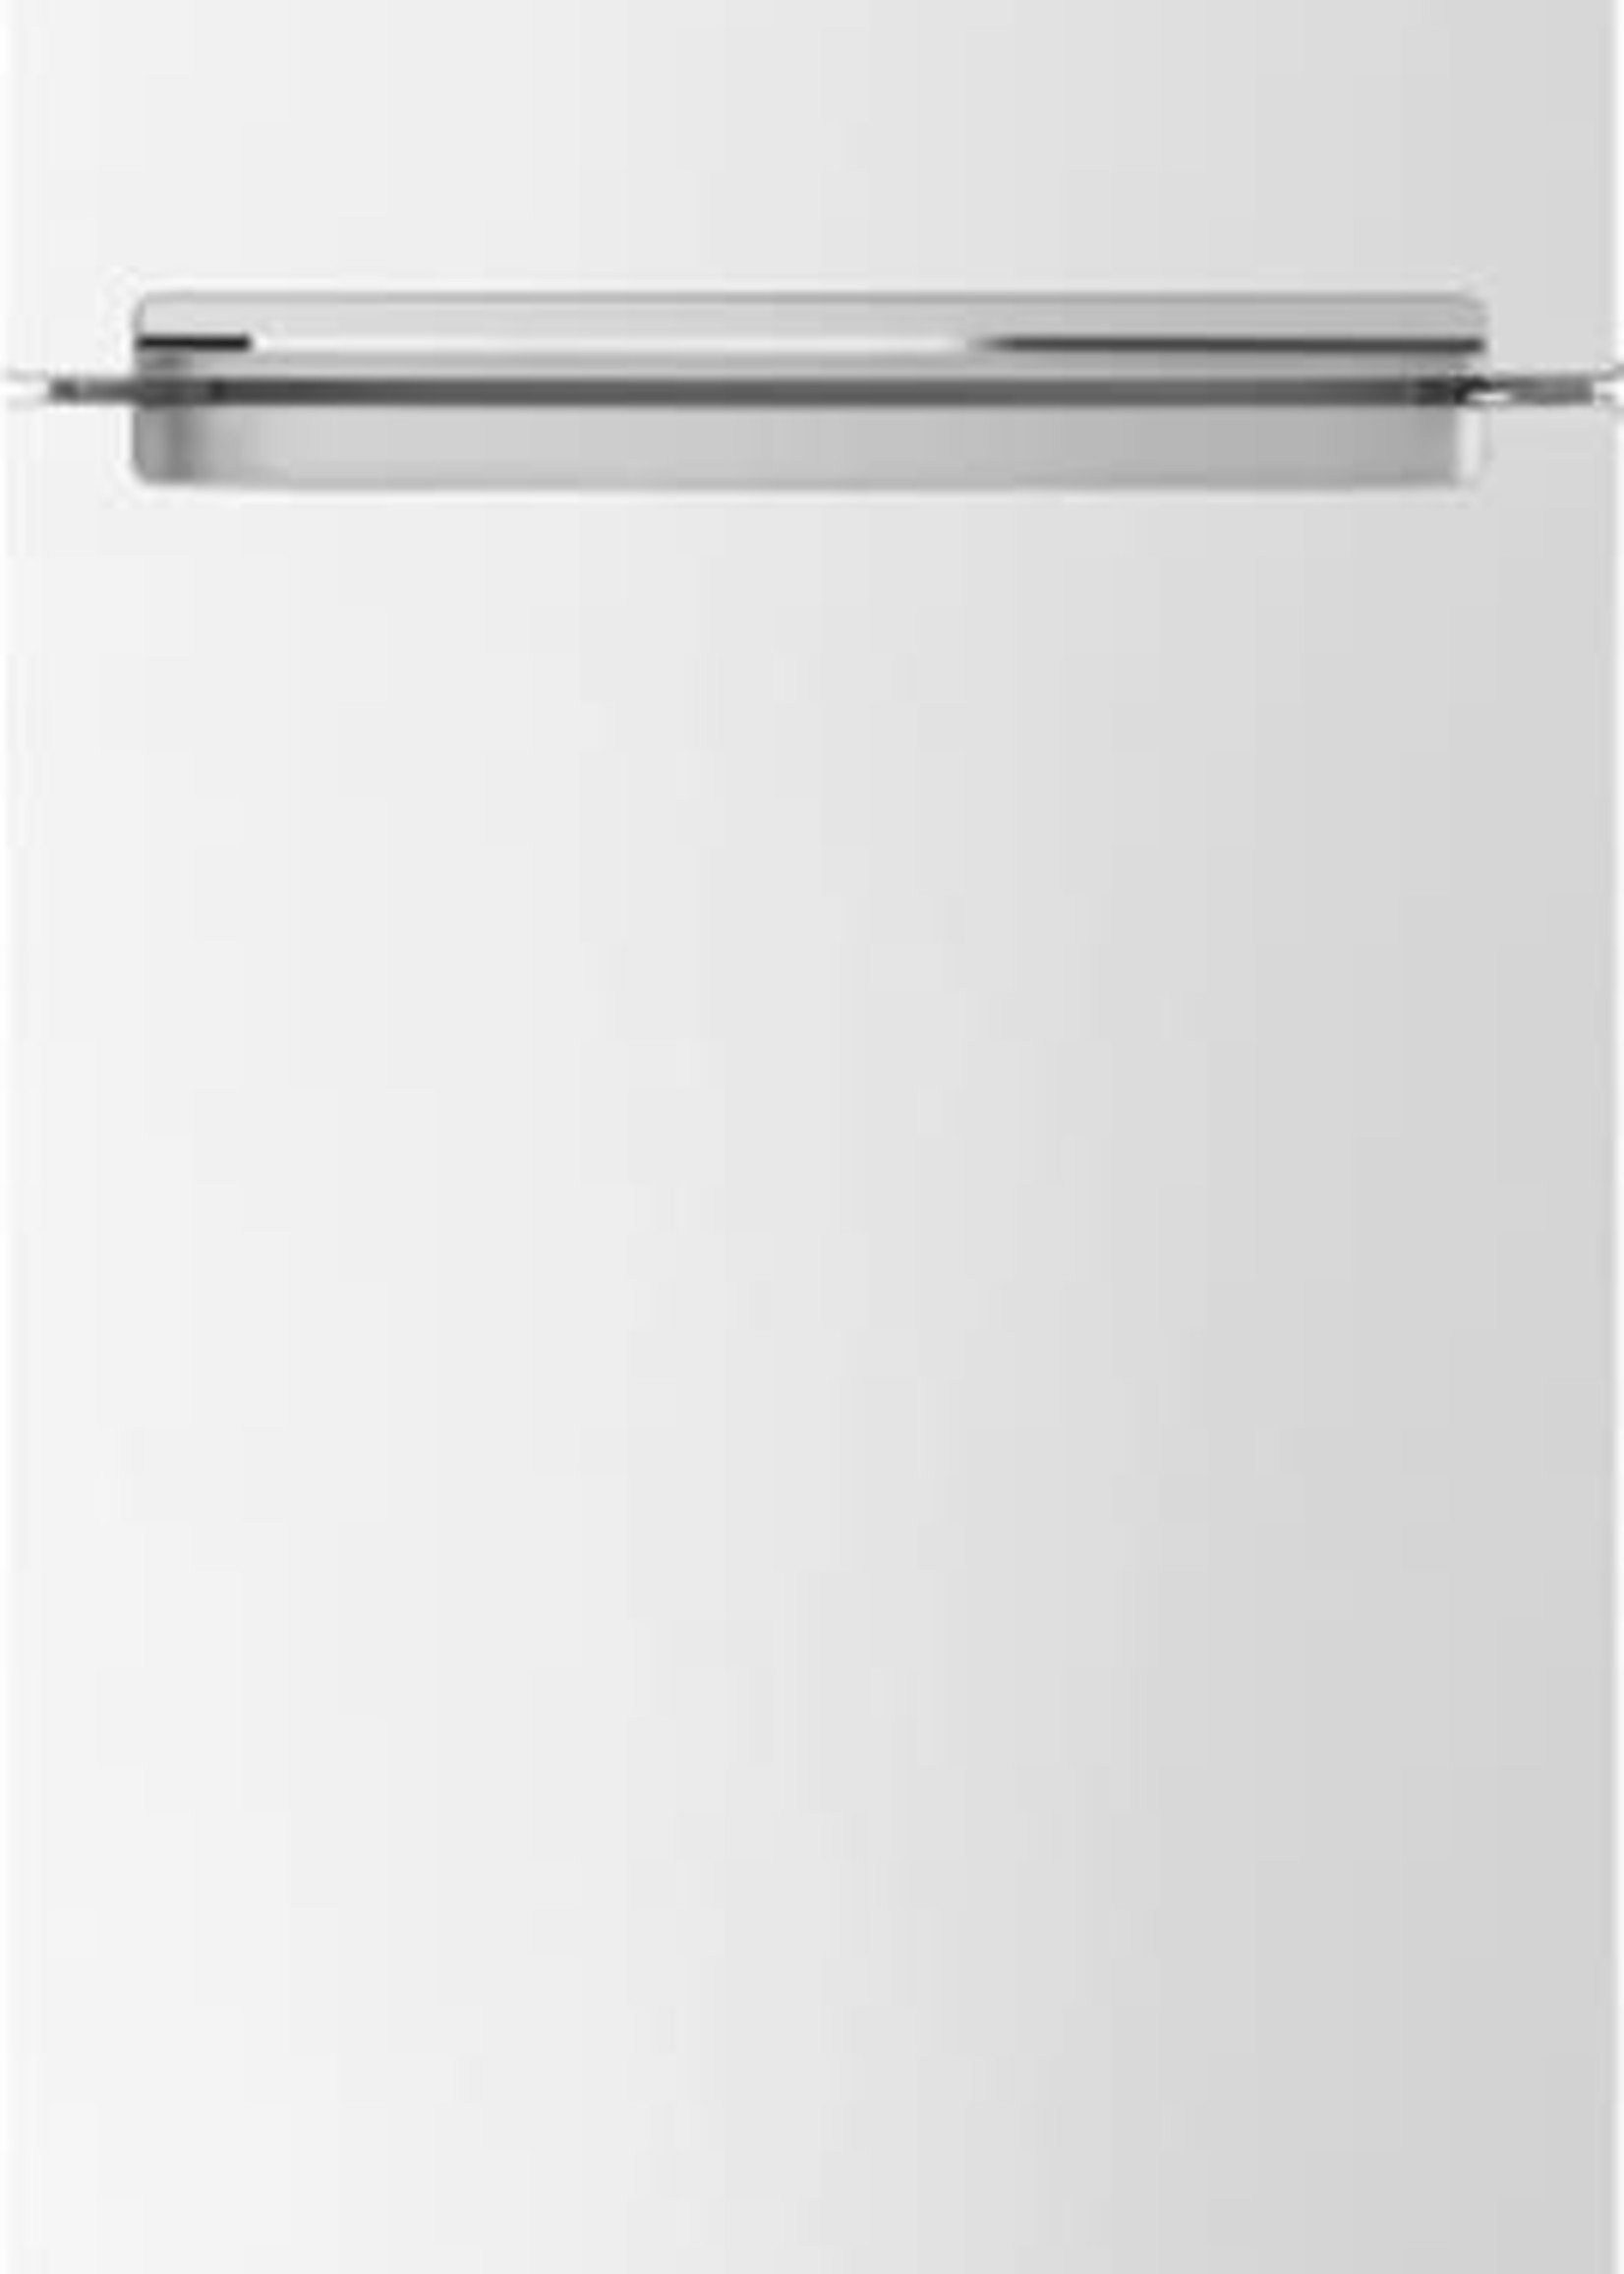 Whirlpool *Whirlpool WRT518SZFW  17.6 cu. ft. Top Freezer Refrigerator in White